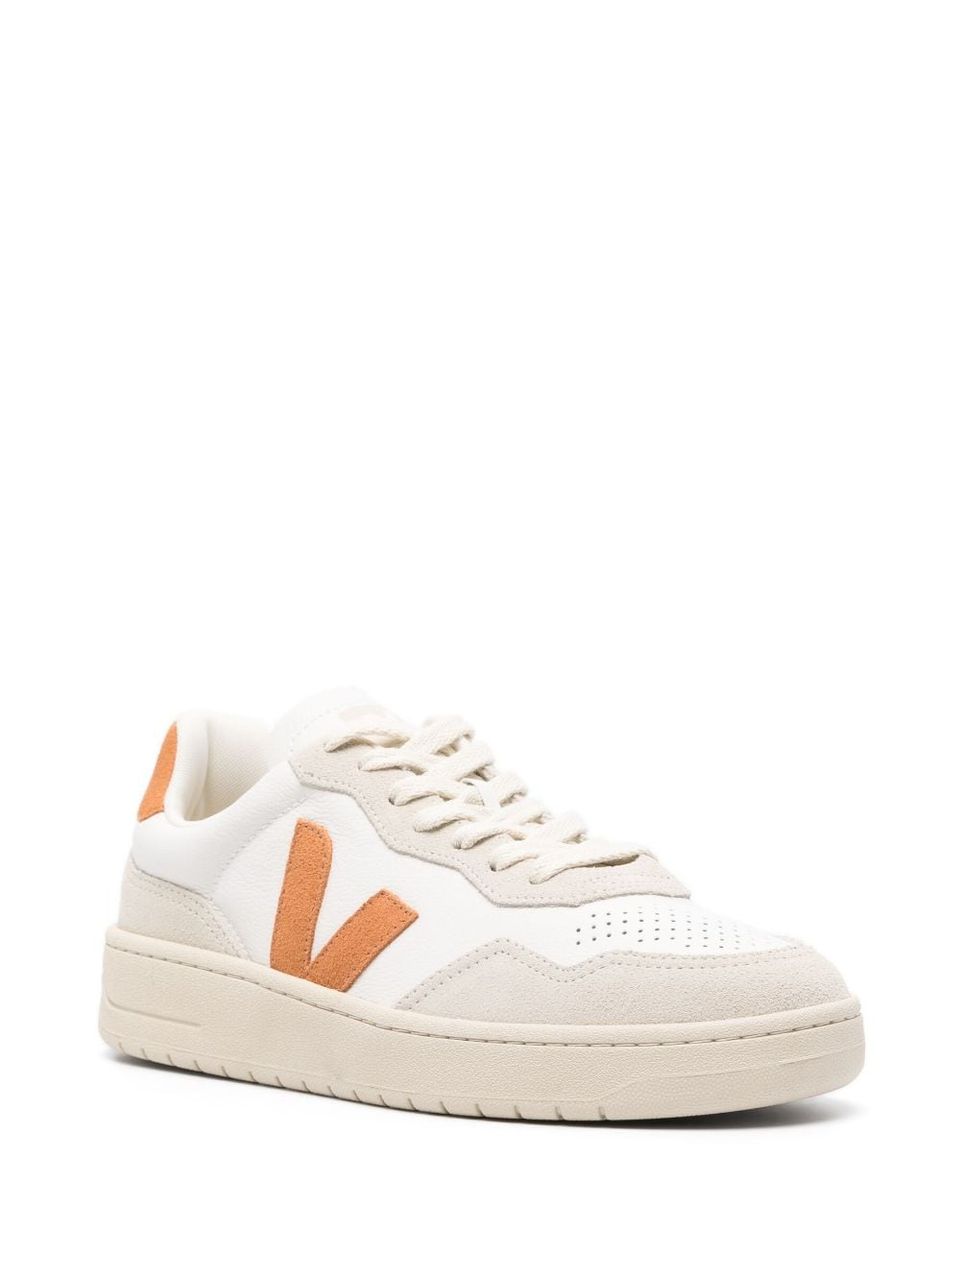 'V-90' sneakers